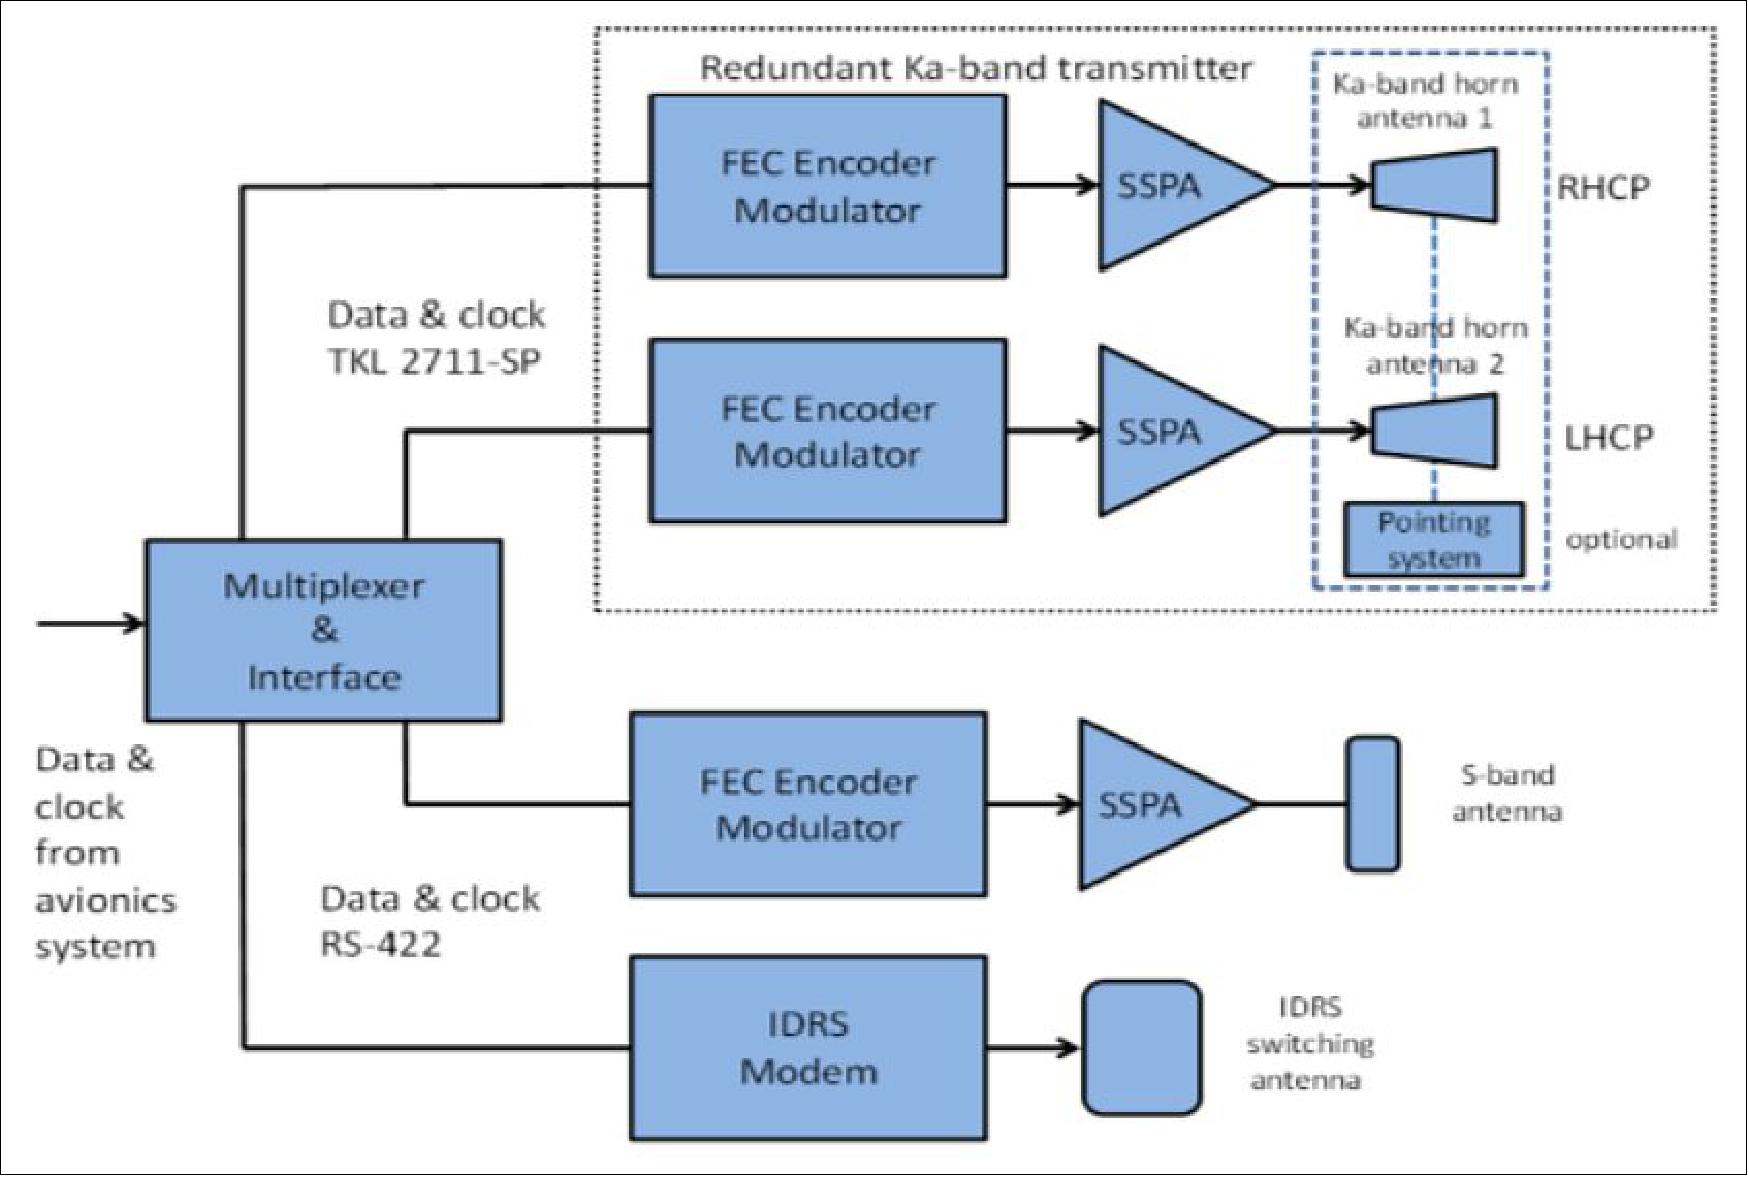 Figure 4: EO-ALERT communications physical architecture (image credit: EO-Alert Consortium)